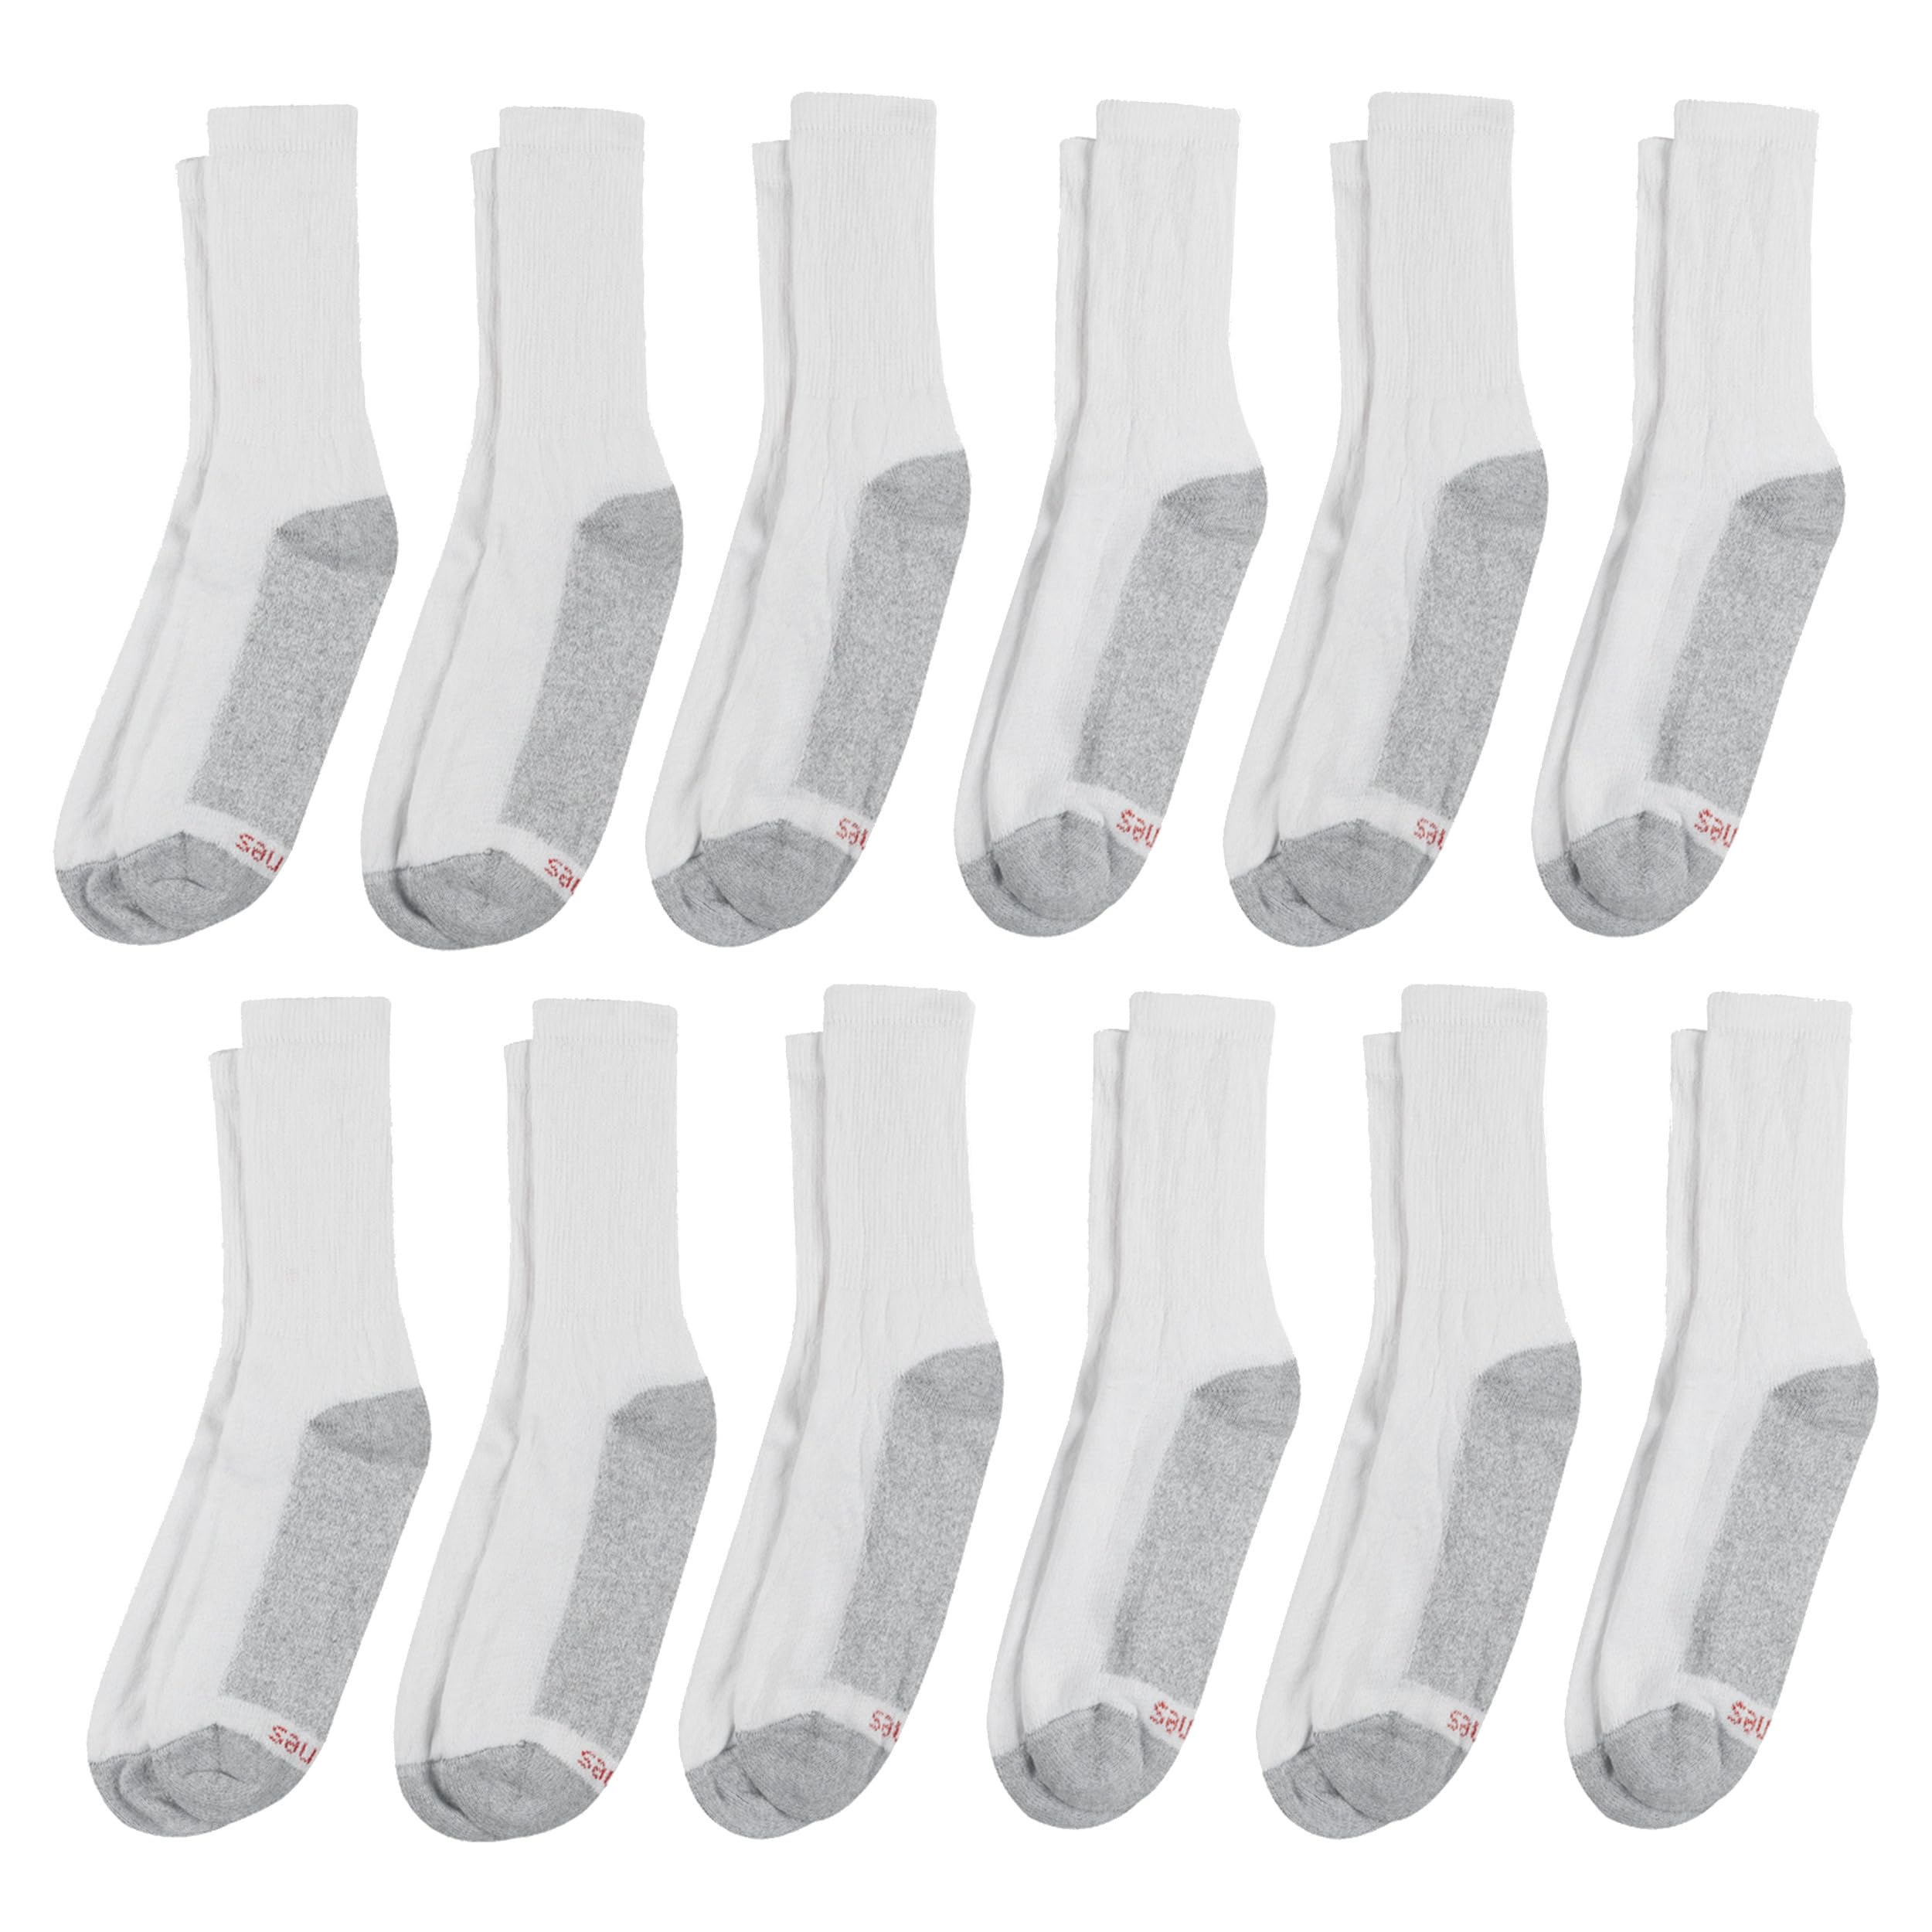 Hanes mens Double Tough Crew Socks, 12-Pair Pack fashion liner socks, White/ Grey Foot Bottom, 12-14 US